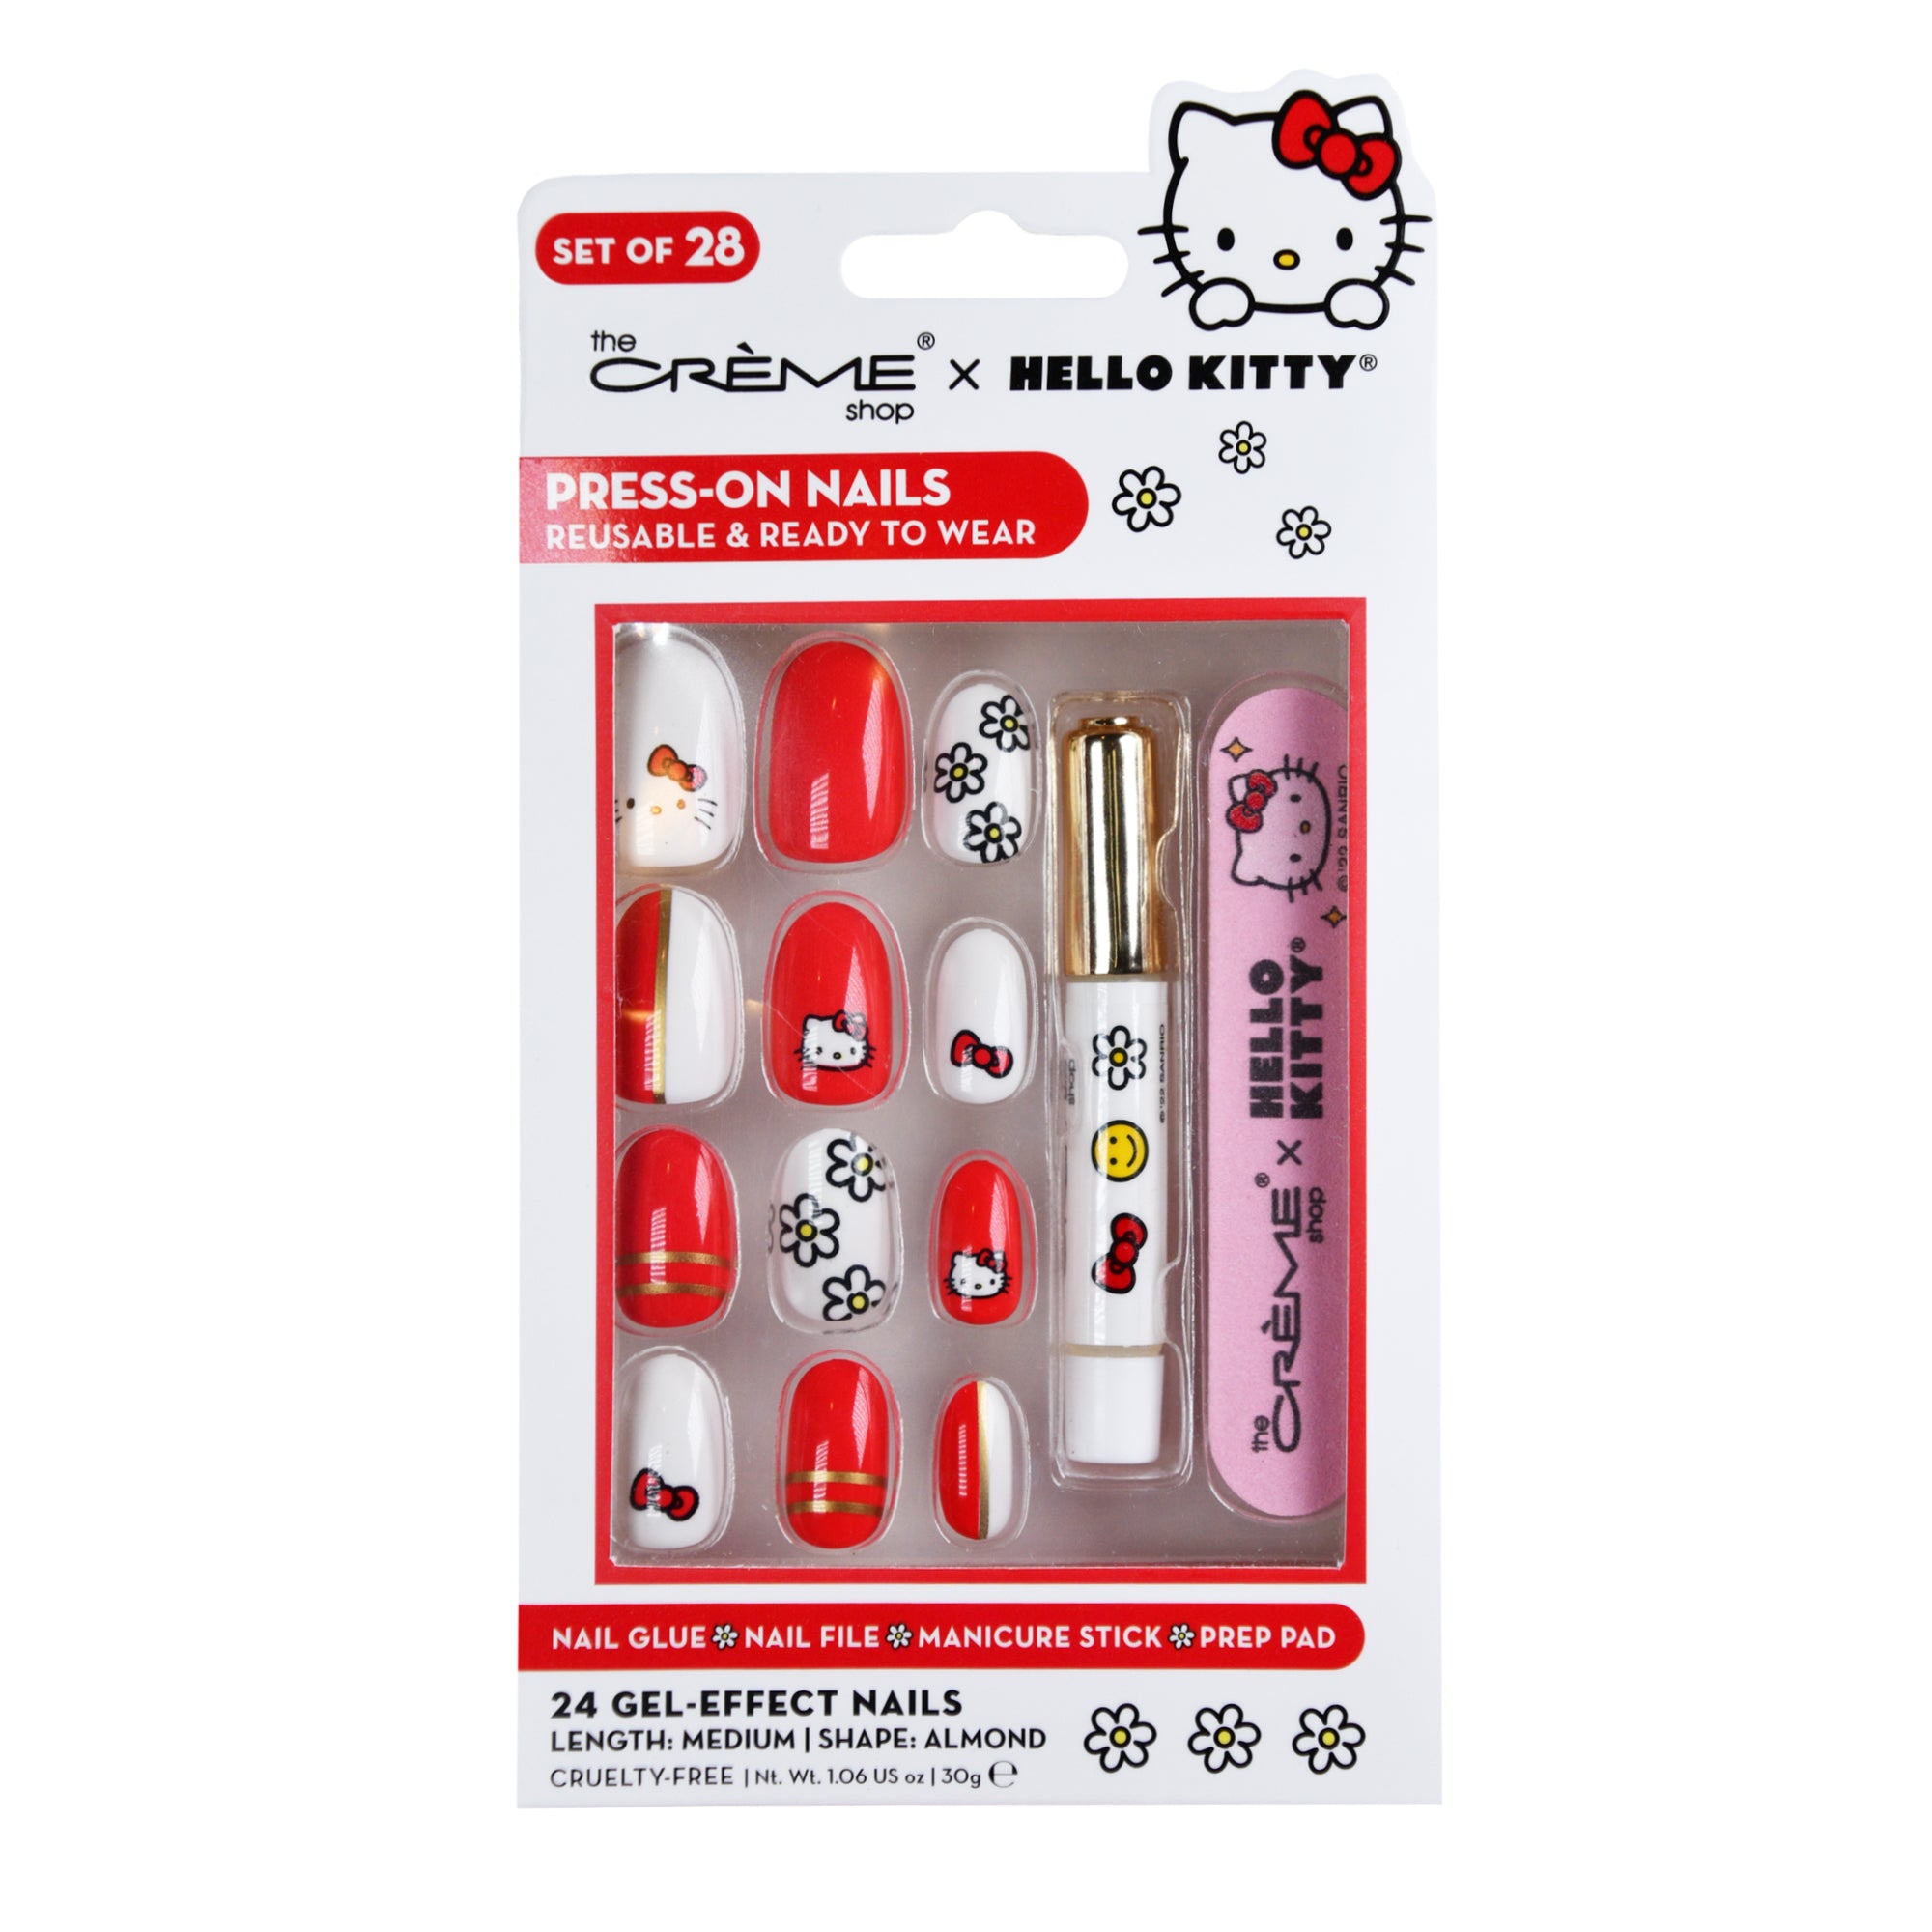 The Crme Shop x Hello Kitty Premium Glass Nail File Set (Pink)